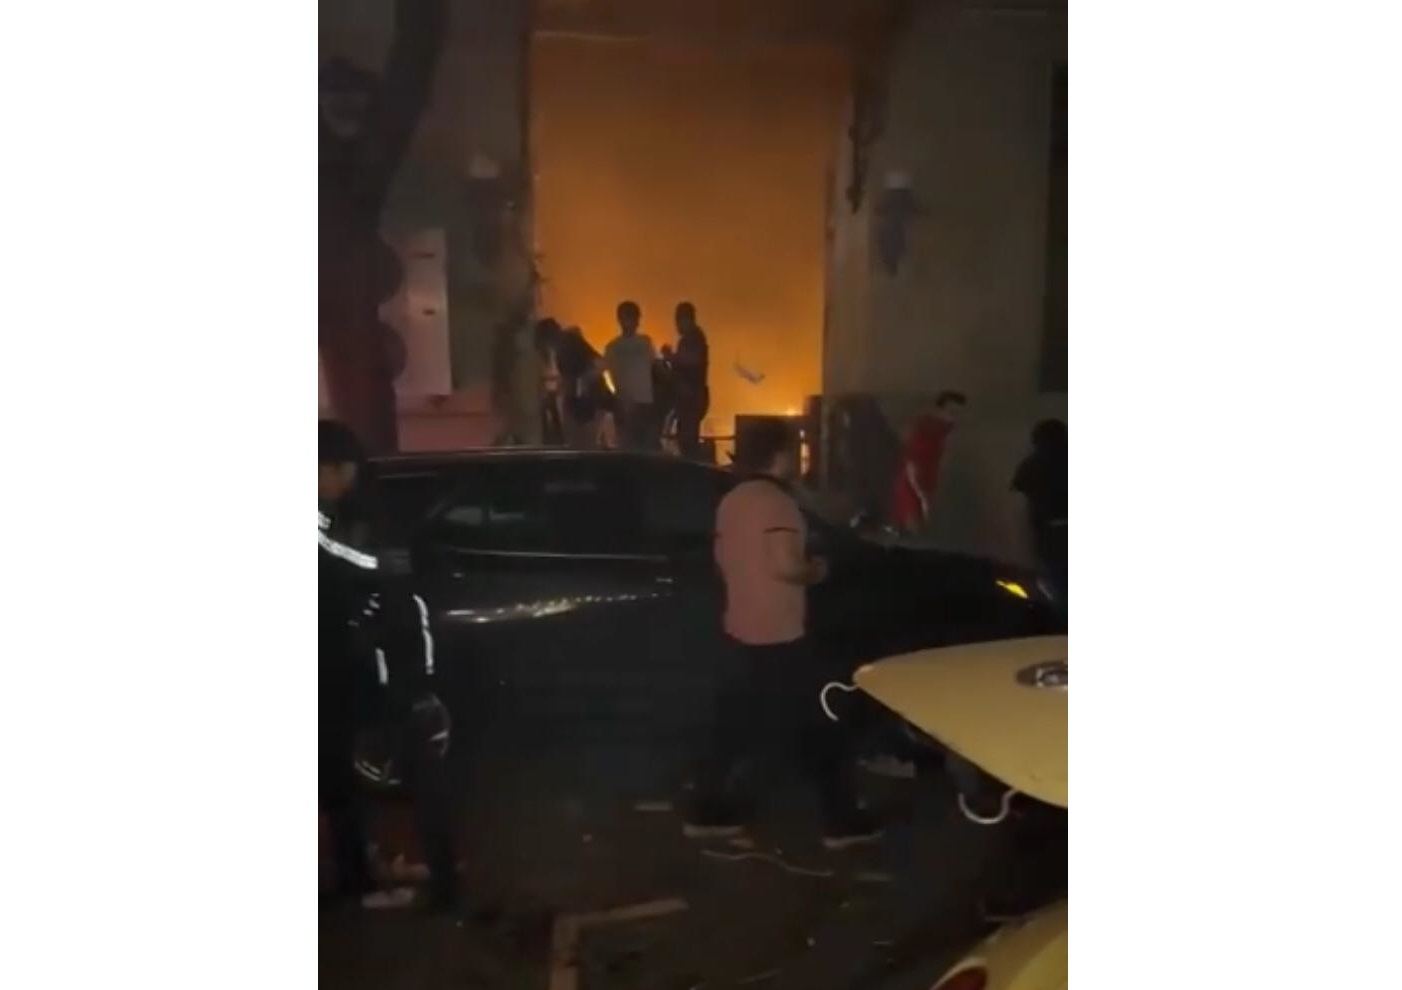 Explosion occurres in Azerbaijan's Baku (PHOTO/VIDEO)